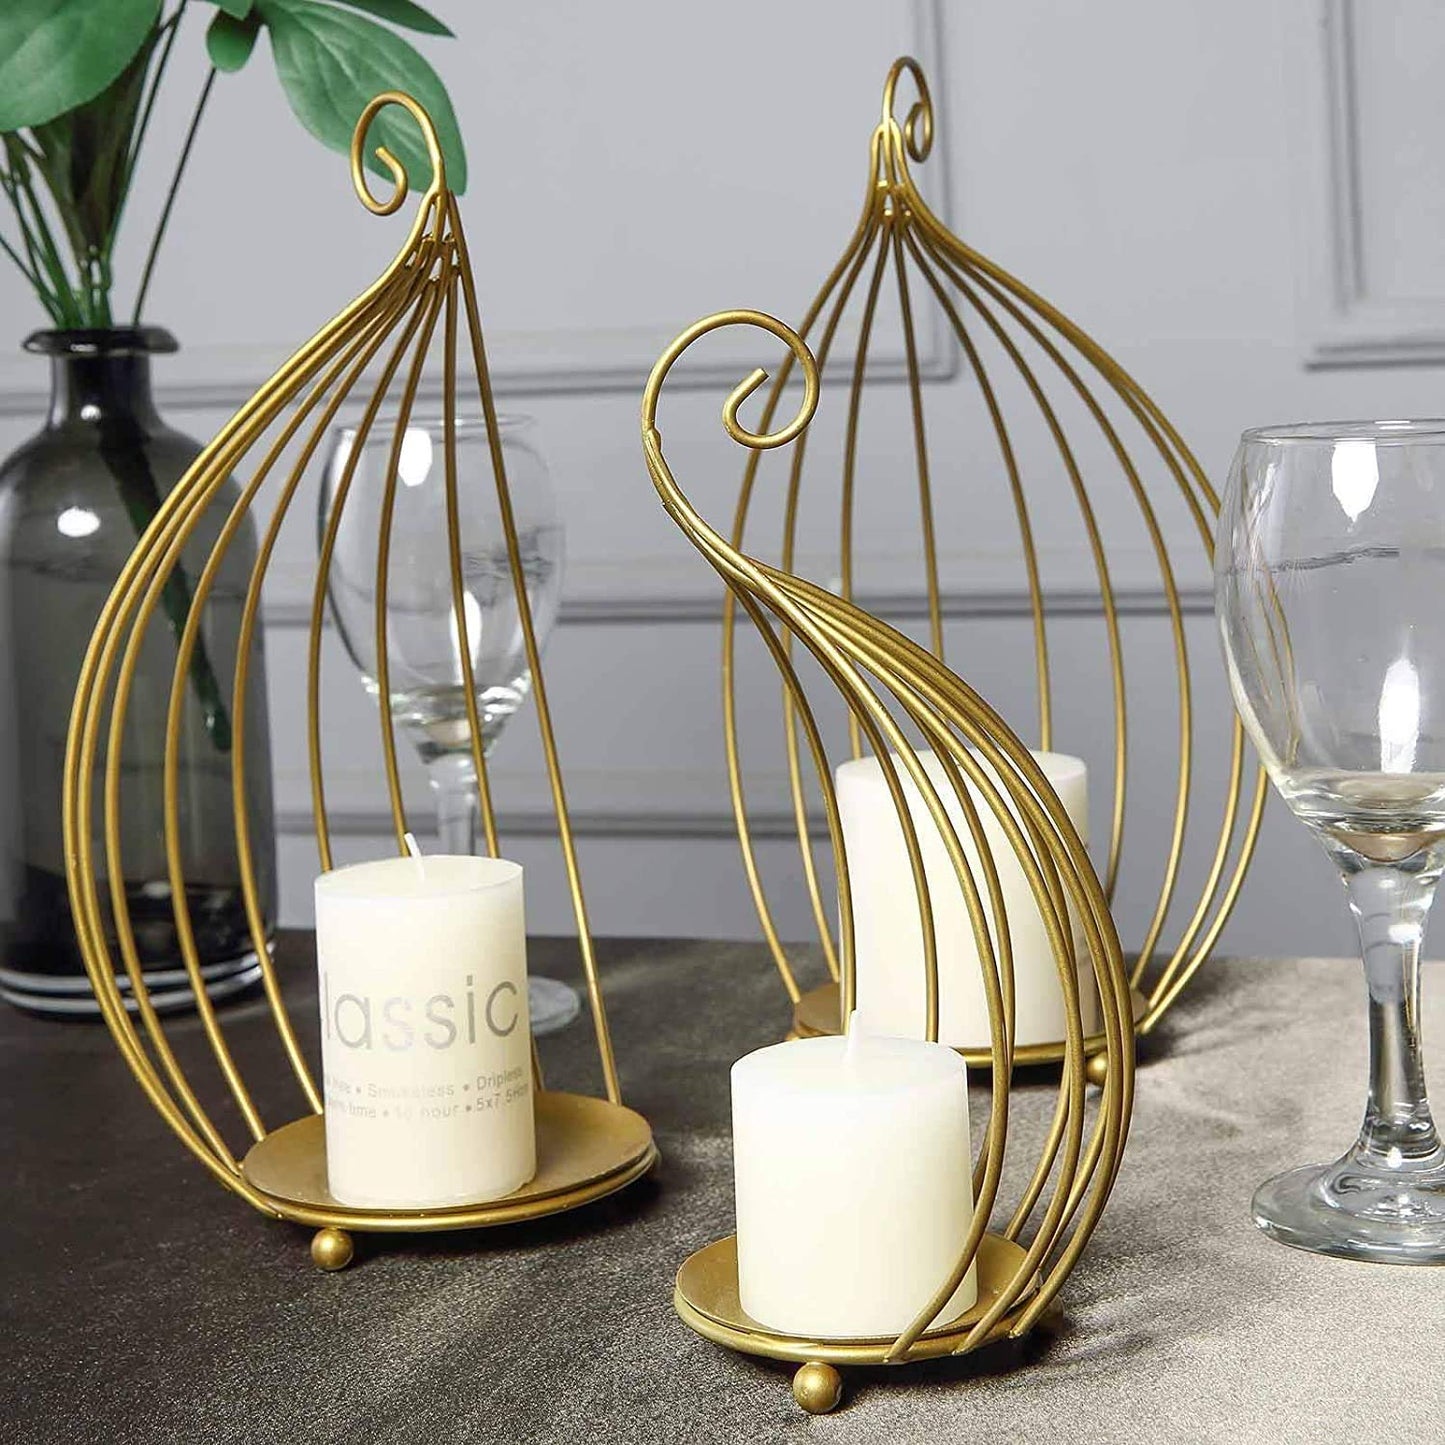 Bird Cage Design Tea Light Candle Holder - Set of 3